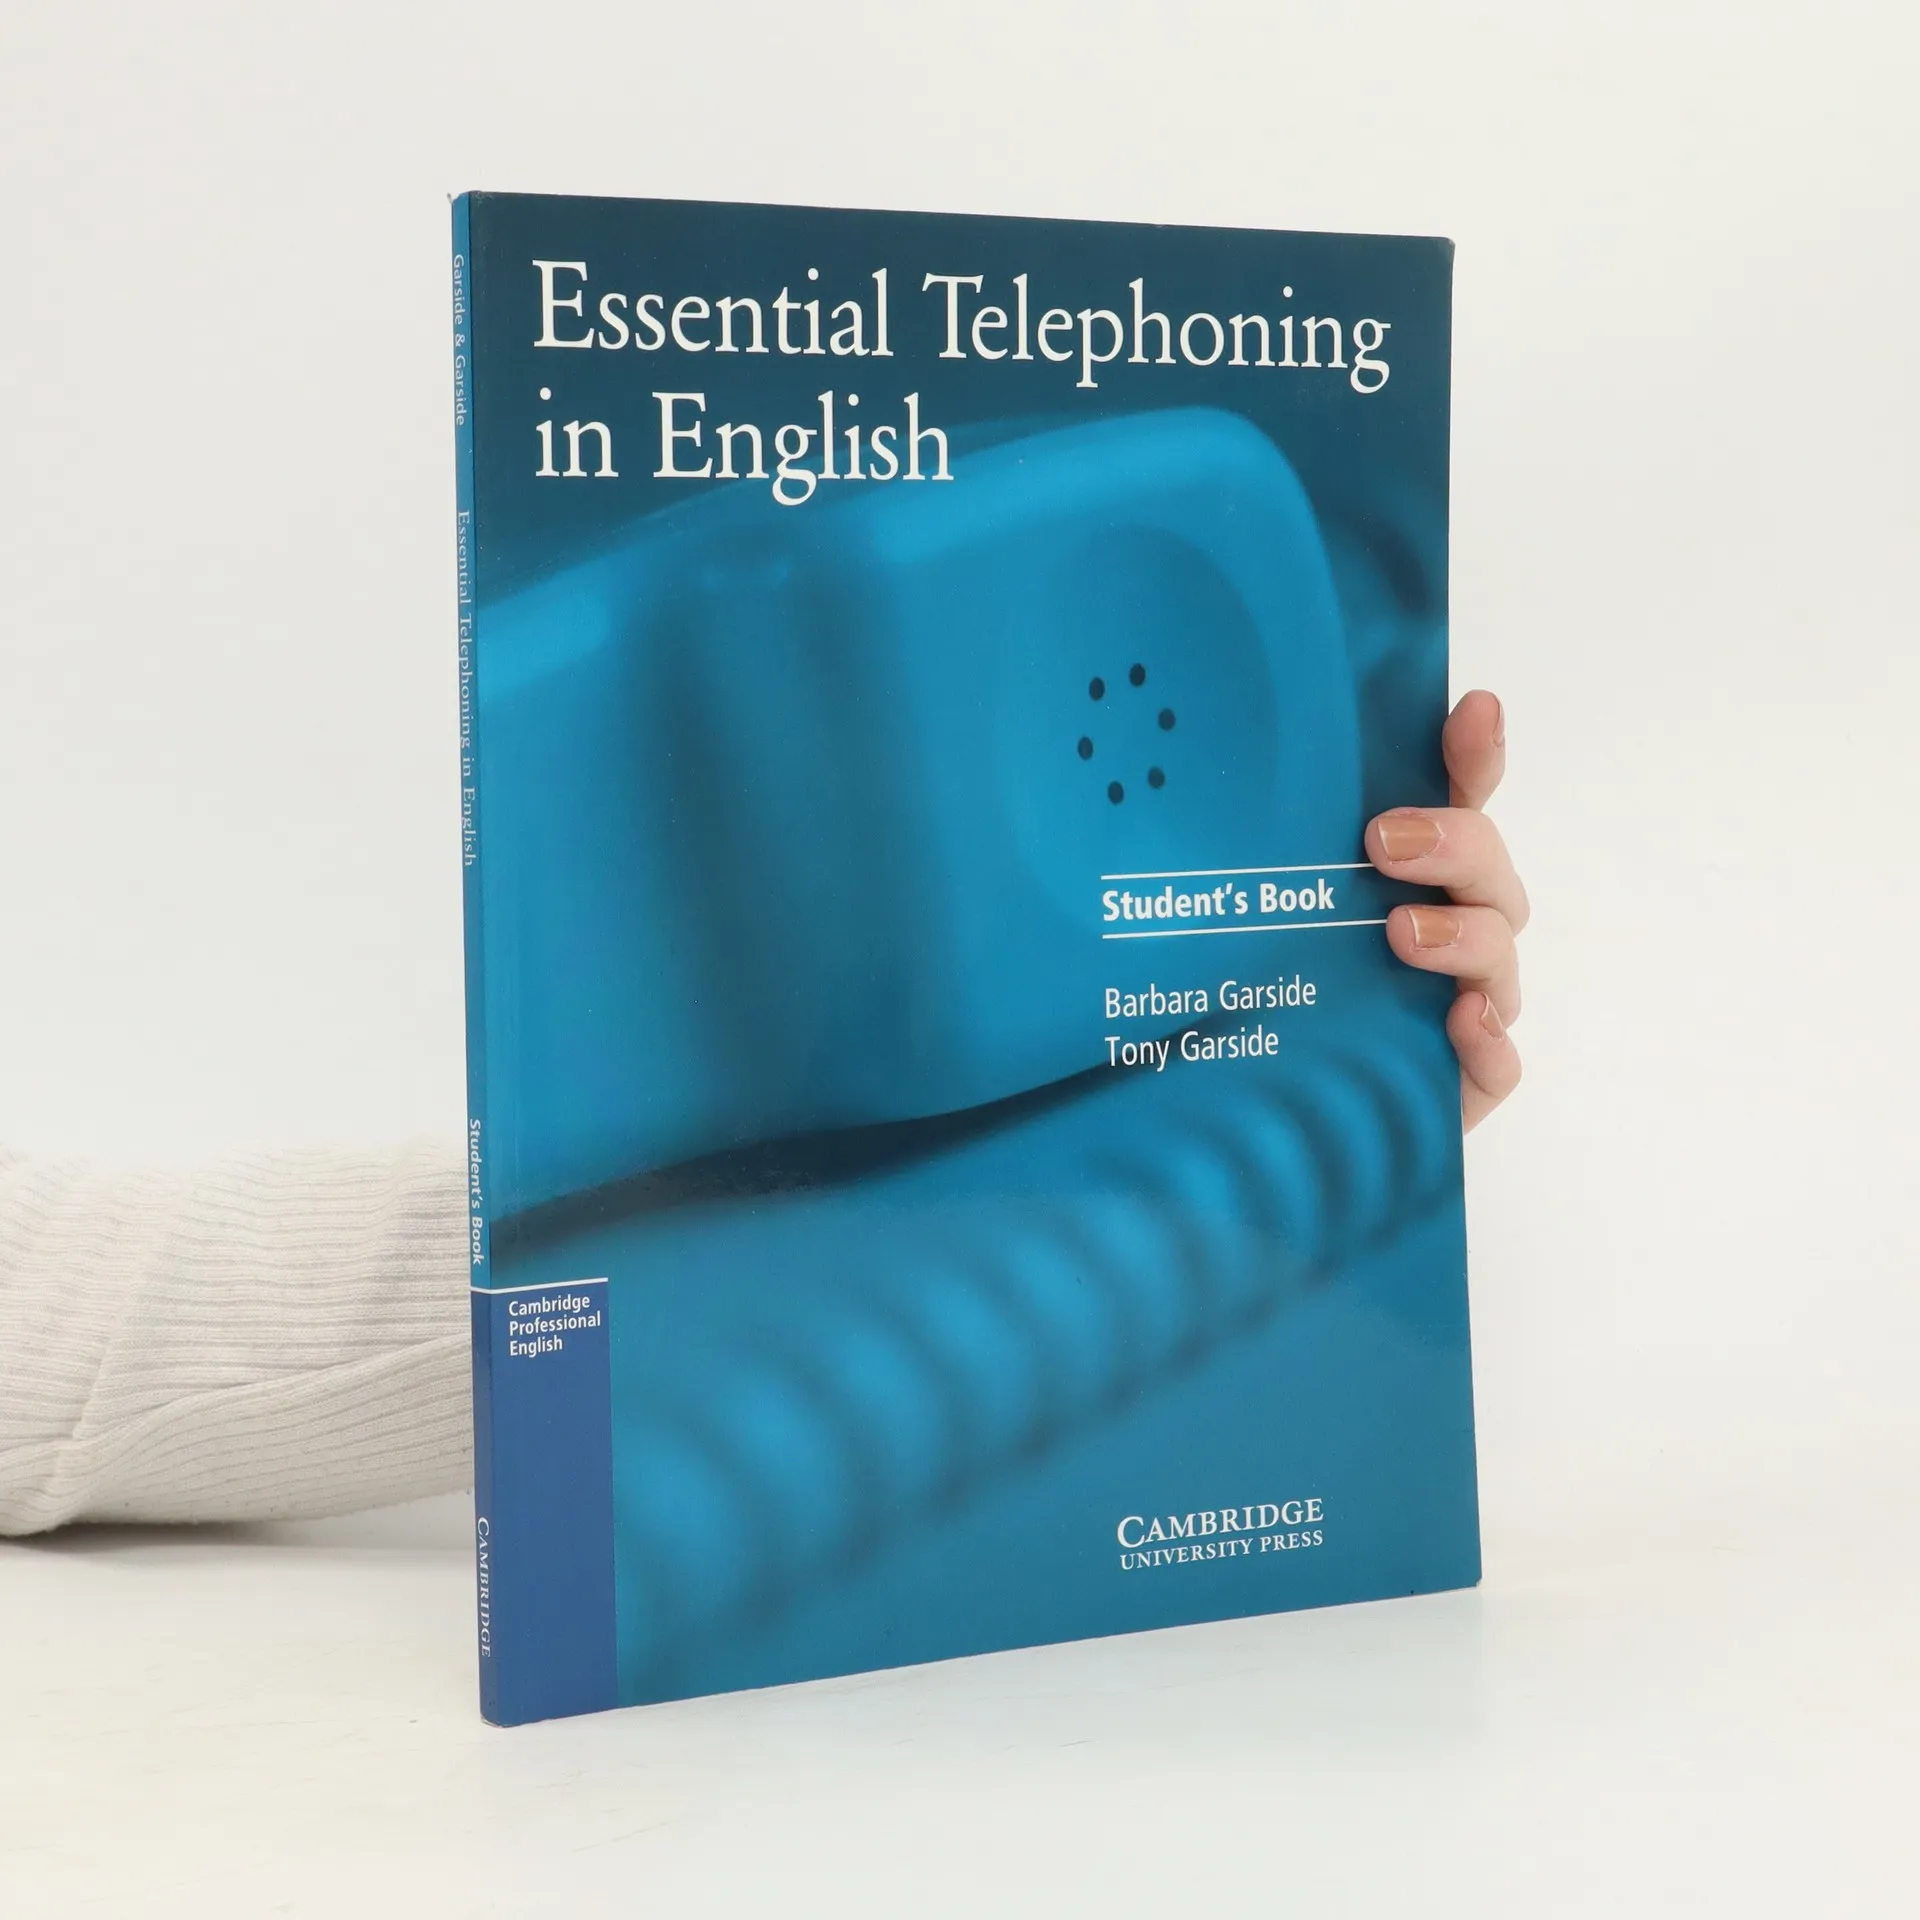 Essential telephoning in English - Barbara Garside - knihobot.sk